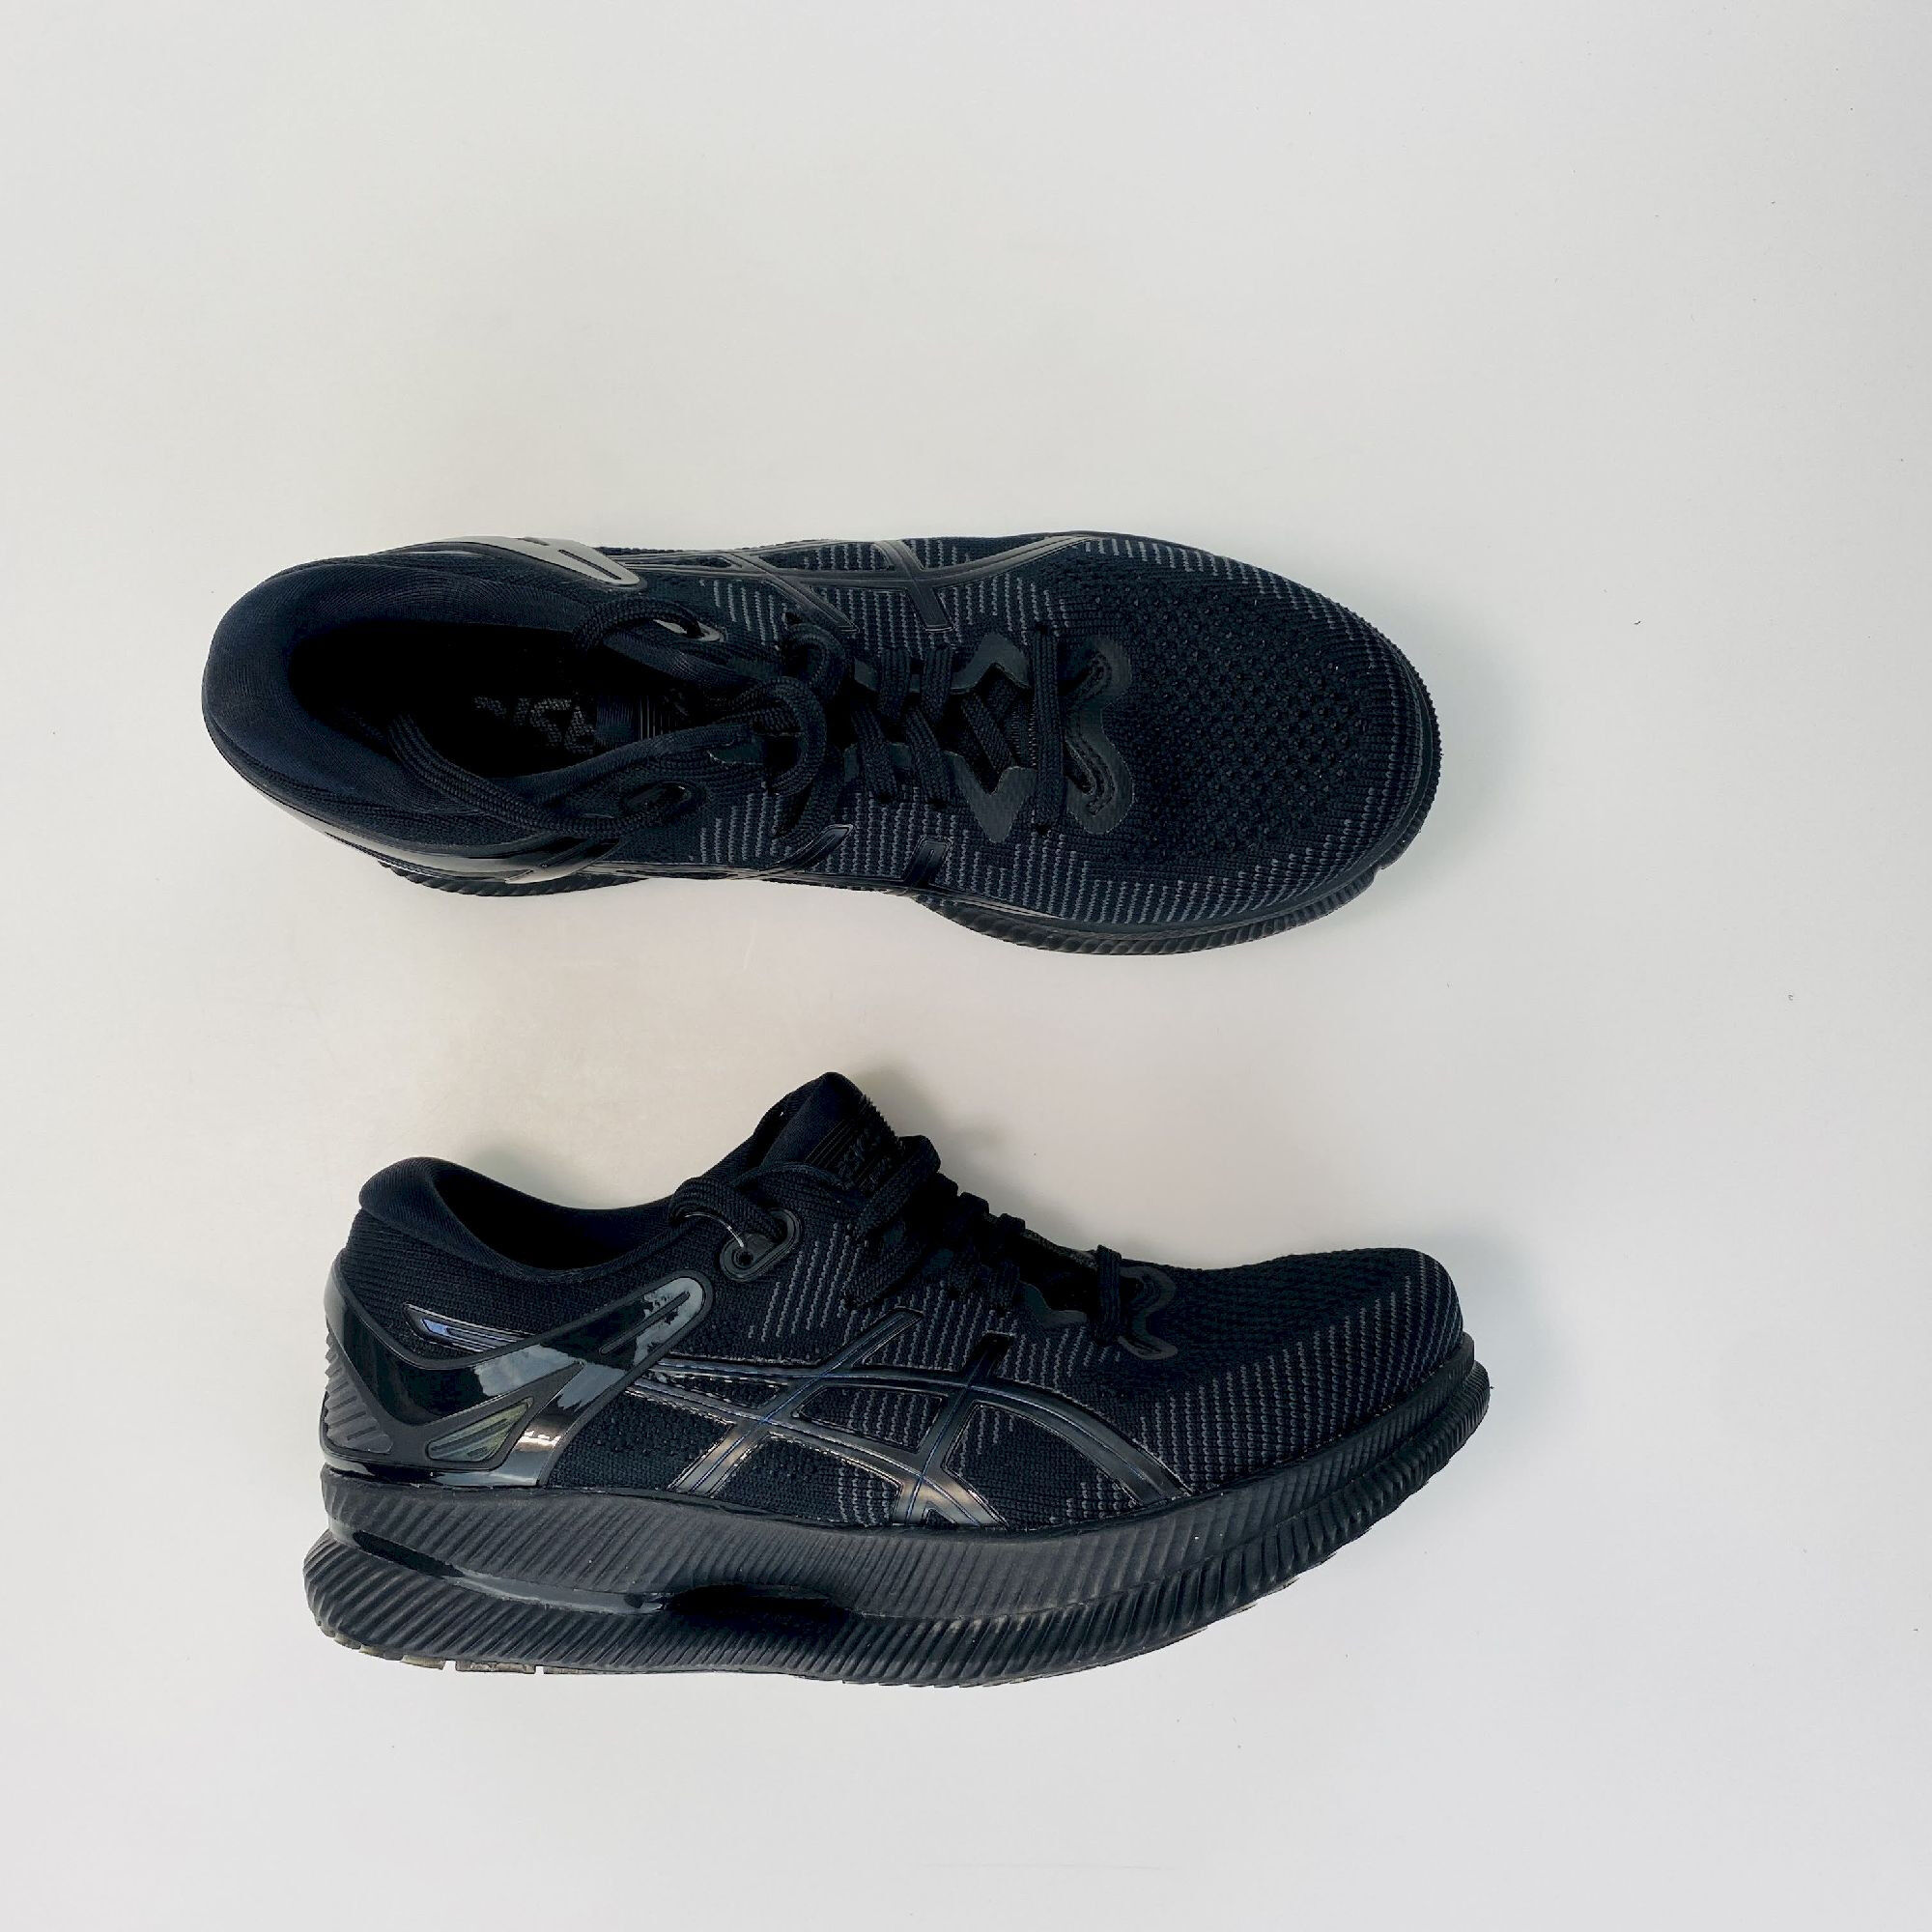 Asics Meta ride - Seconde main Chaussures running homme - Noir - 40 | Hardloop